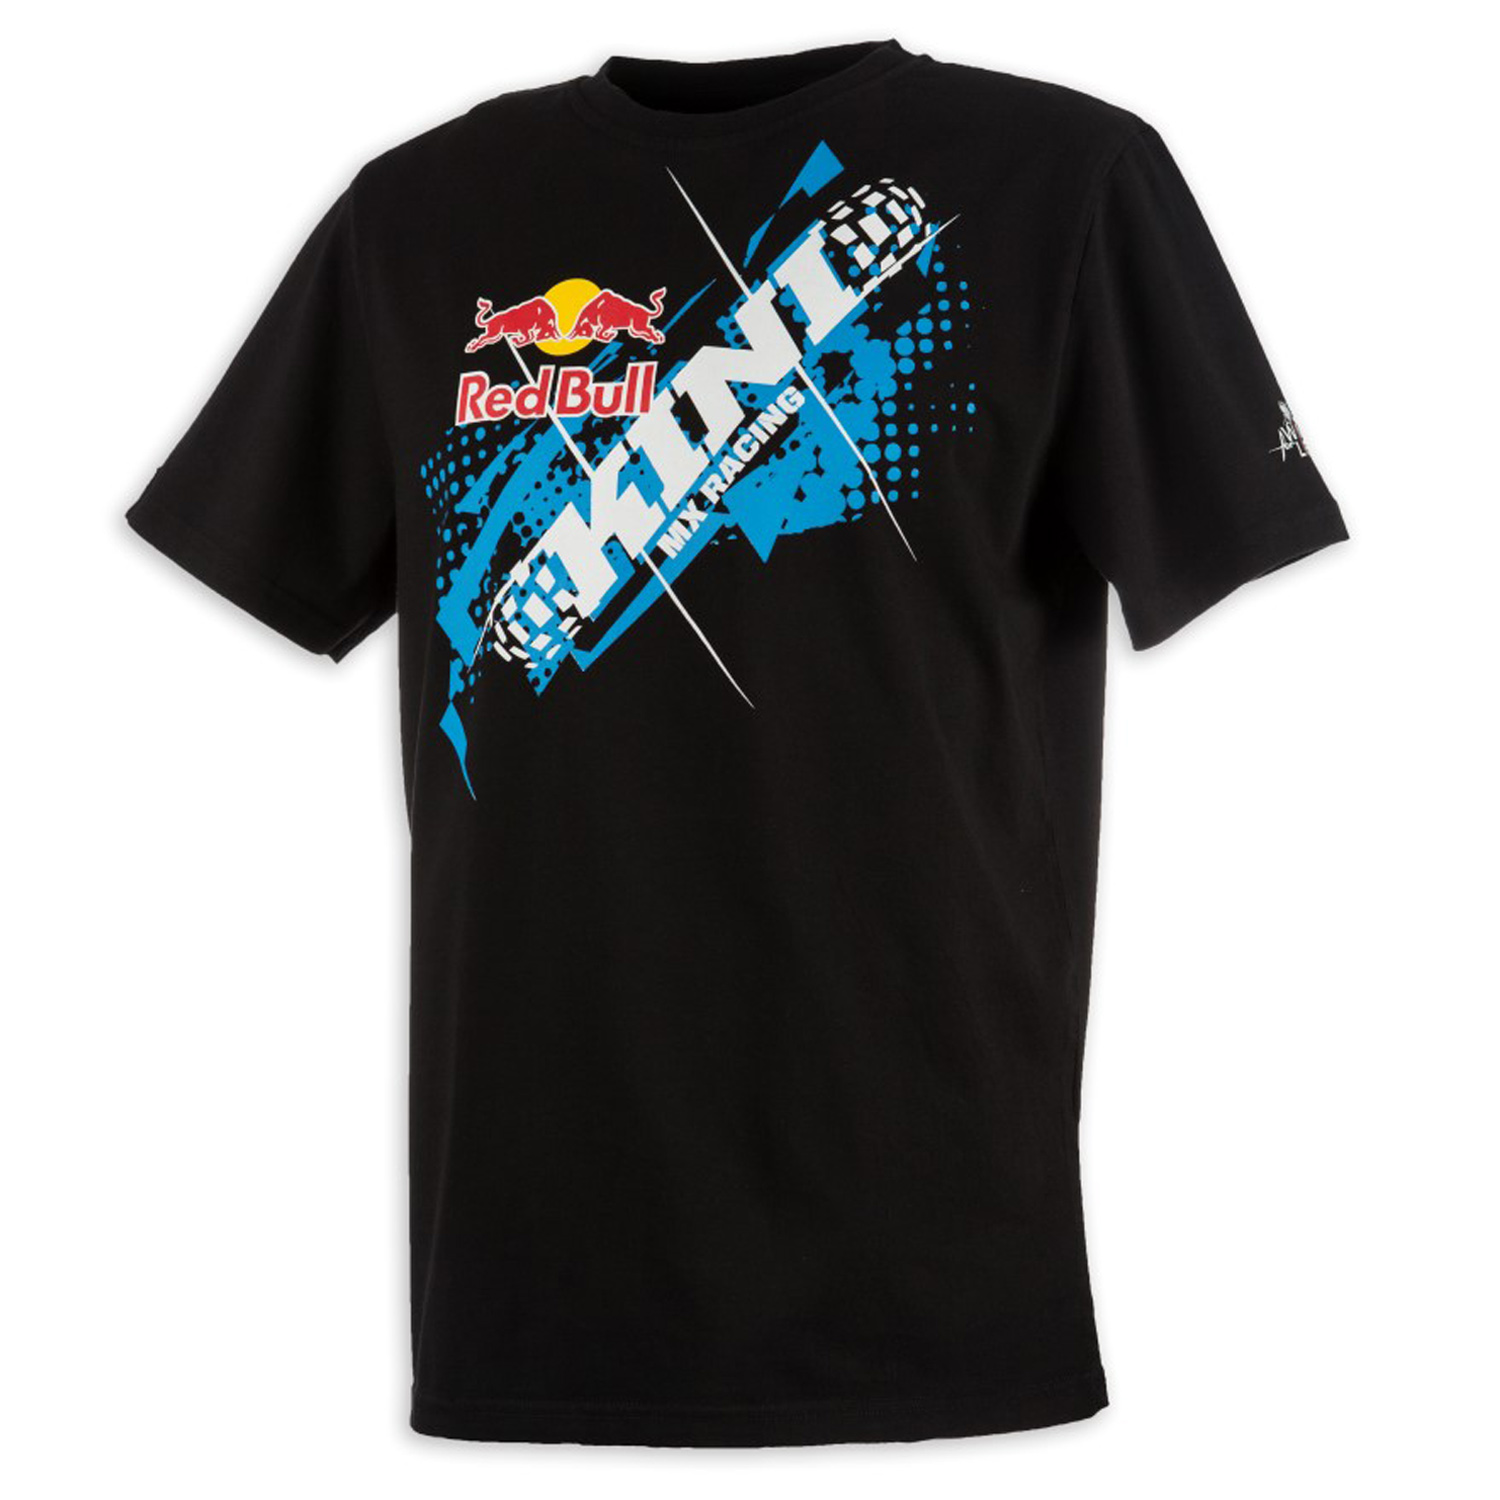 Kini Red Bull T-Shirt Chopped Black